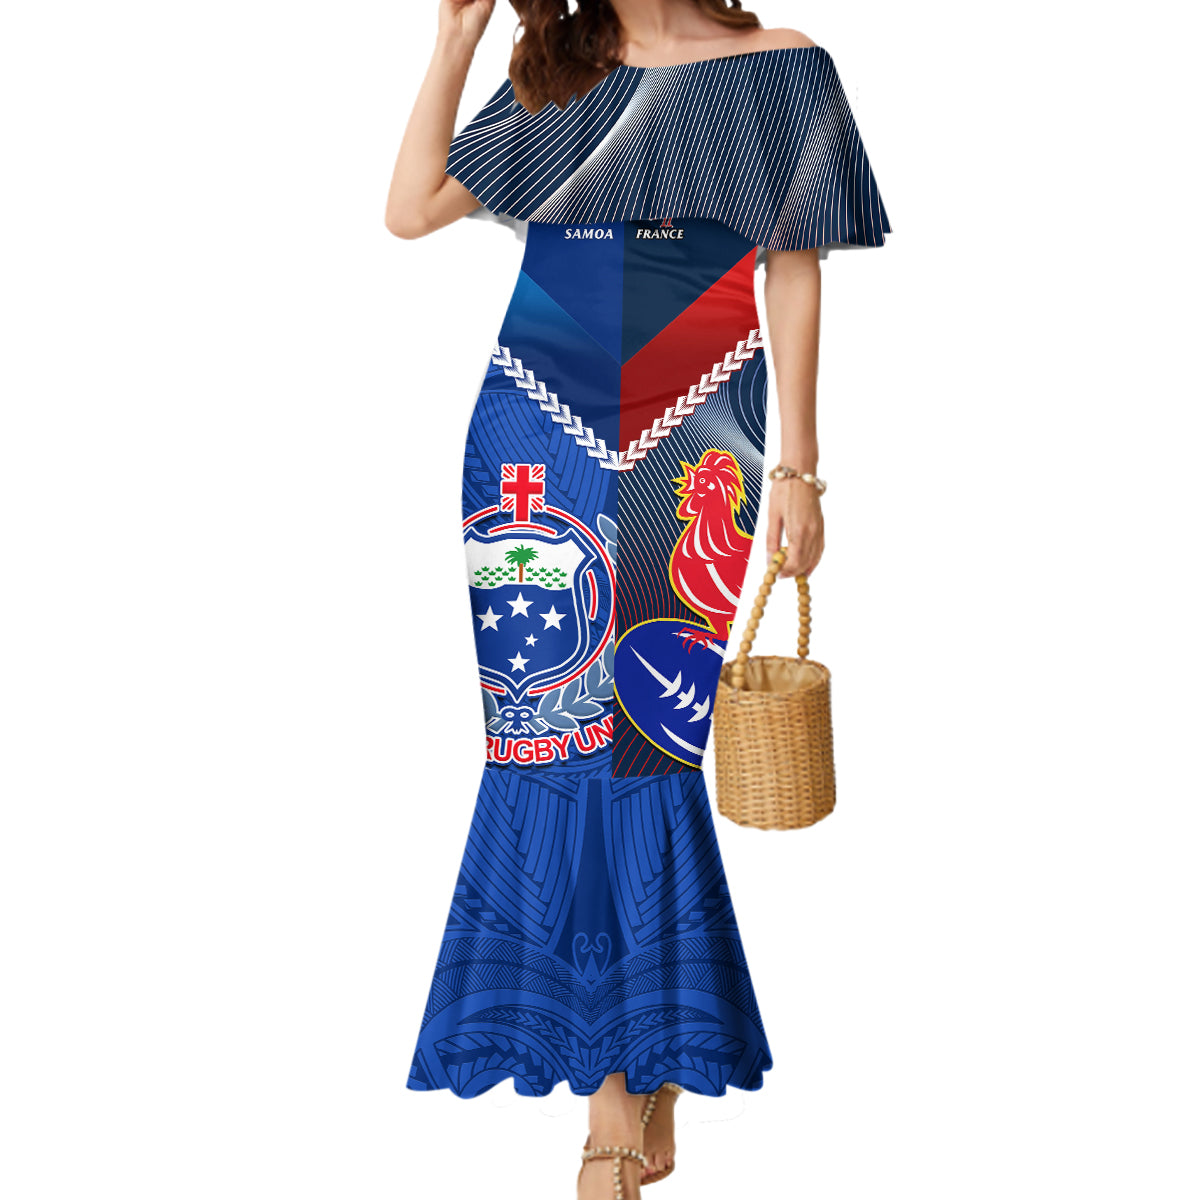 samoa-and-france-rugby-mermaid-dress-2023-world-cup-manu-samoa-with-les-bleus